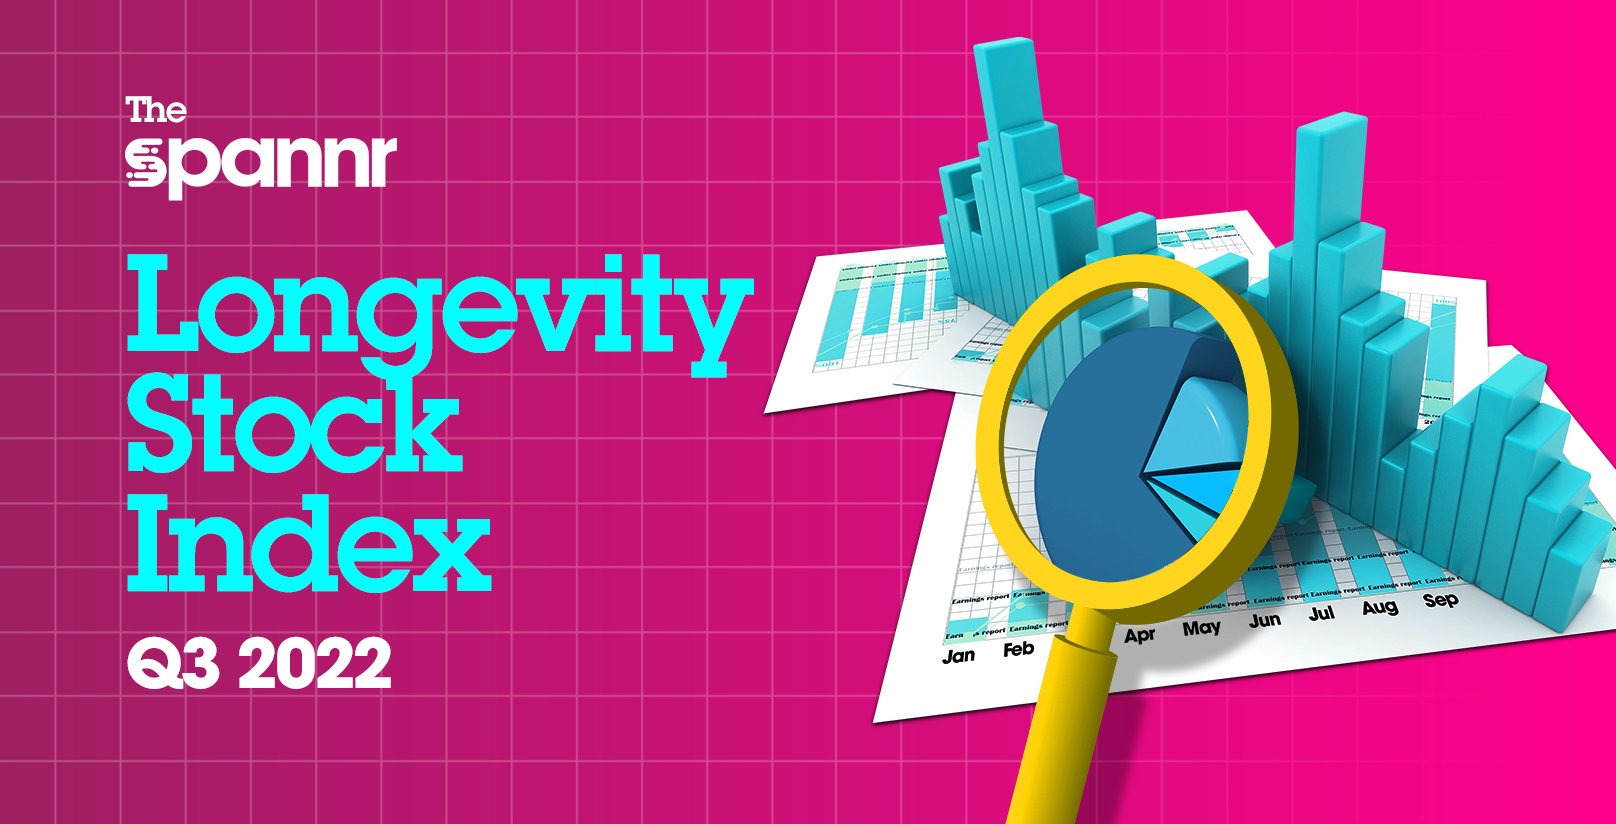 Spannr Longevity Stock Index Review: Q3 2022